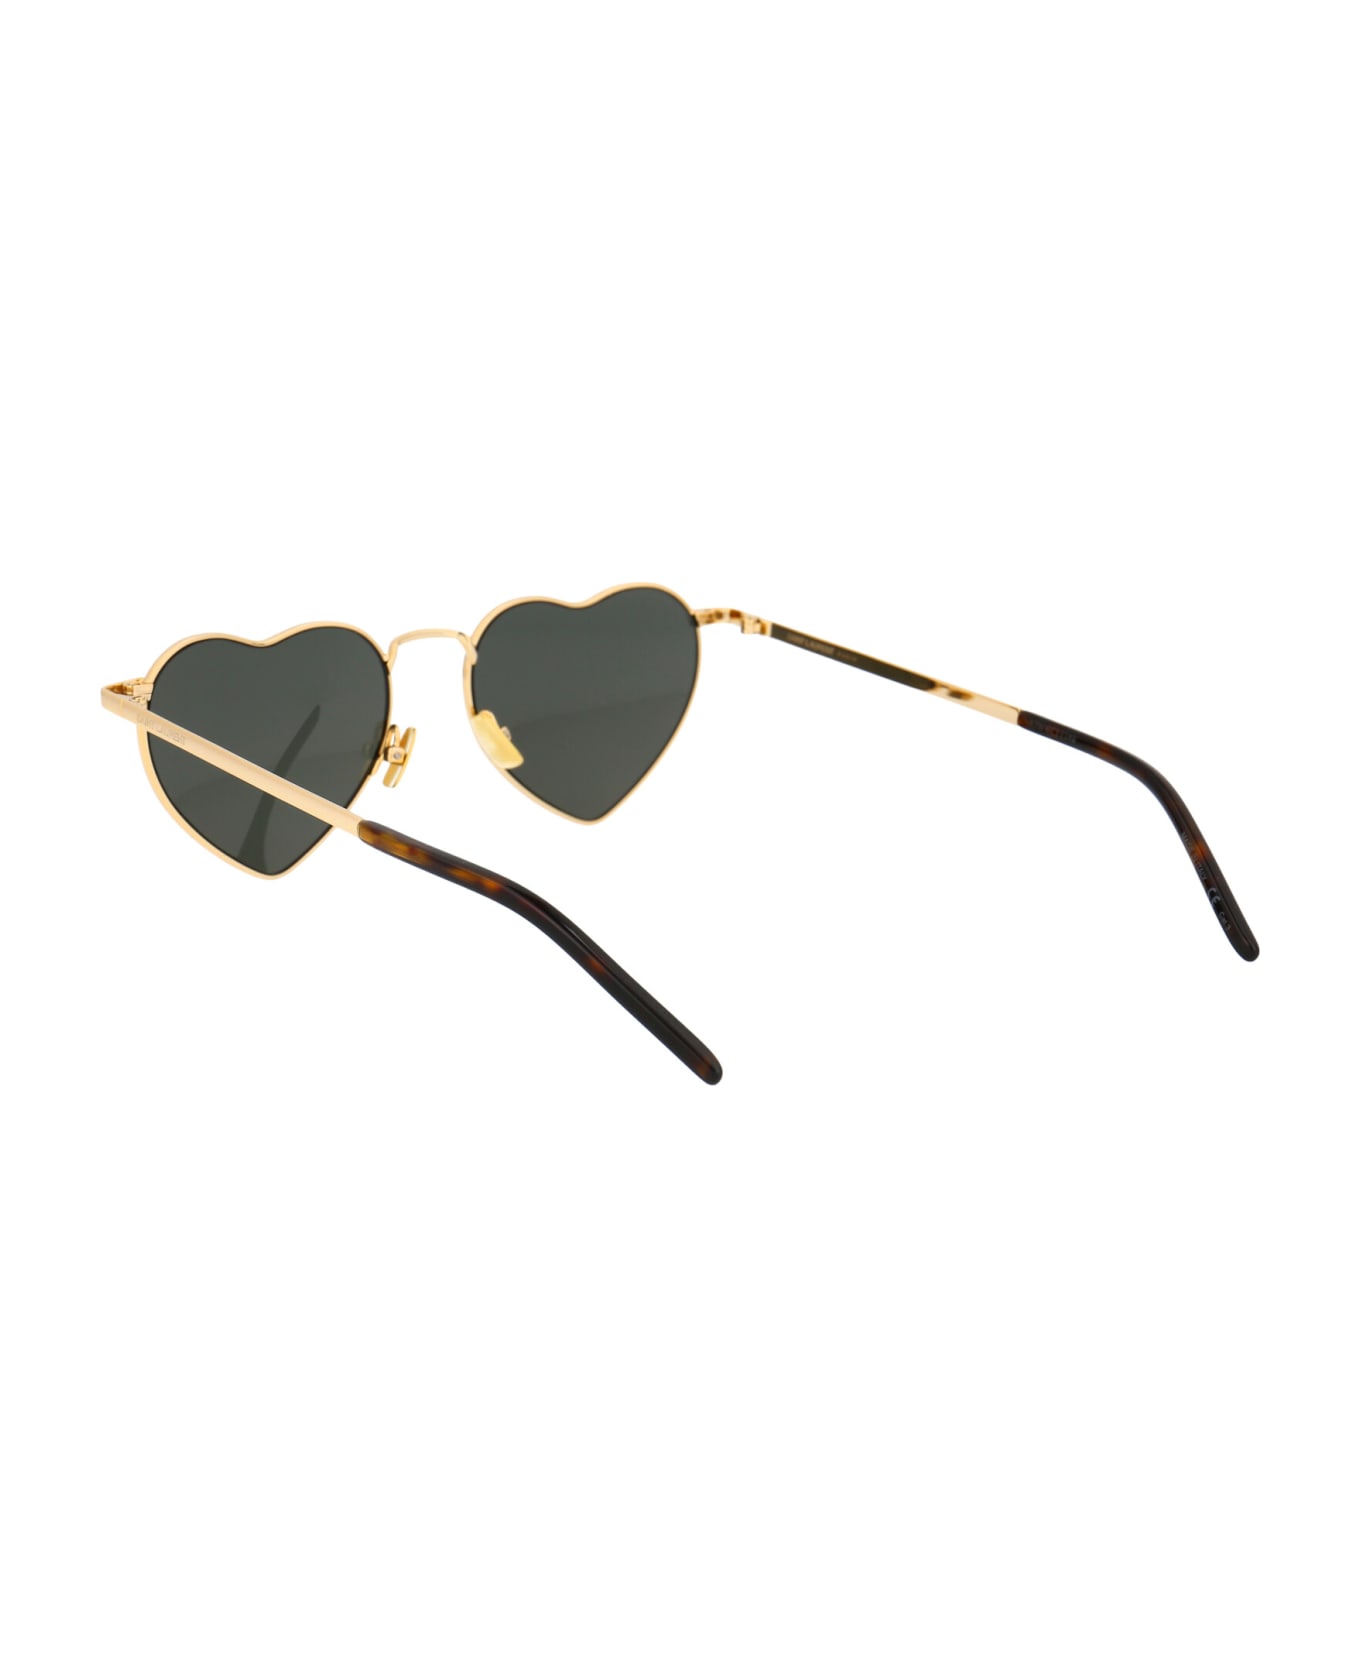 Saint Laurent Eyewear Sl 301 Loulou Sunglasses - 004 GOLD GOLD GREY